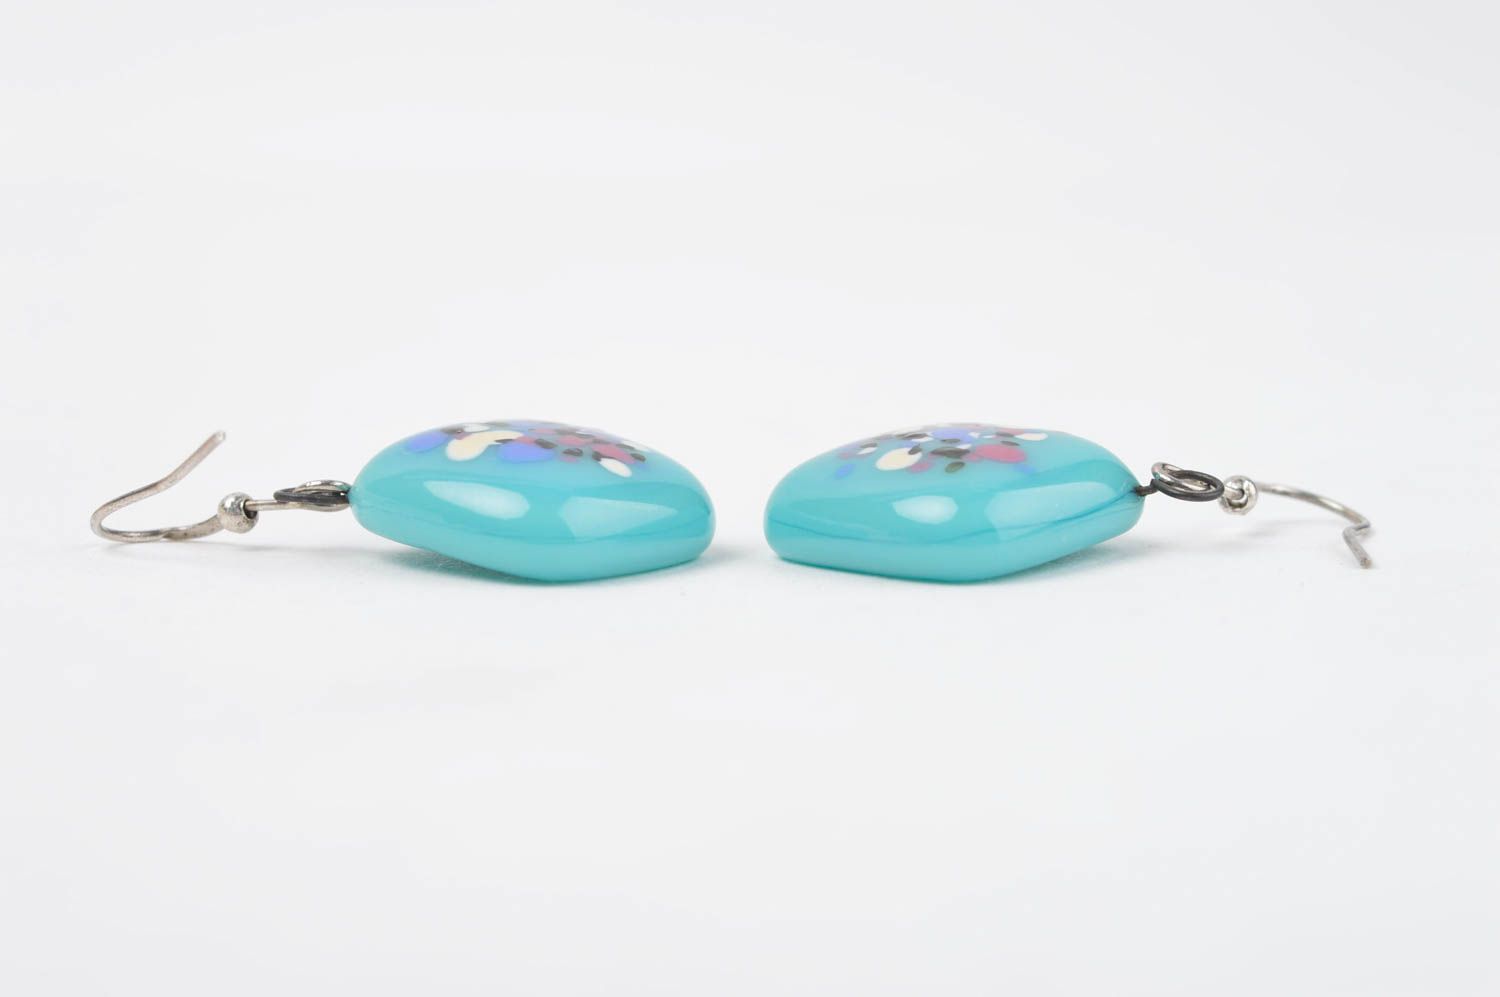 Unusual handmade glass earrings glass art handmade accessories gifts for her photo 2